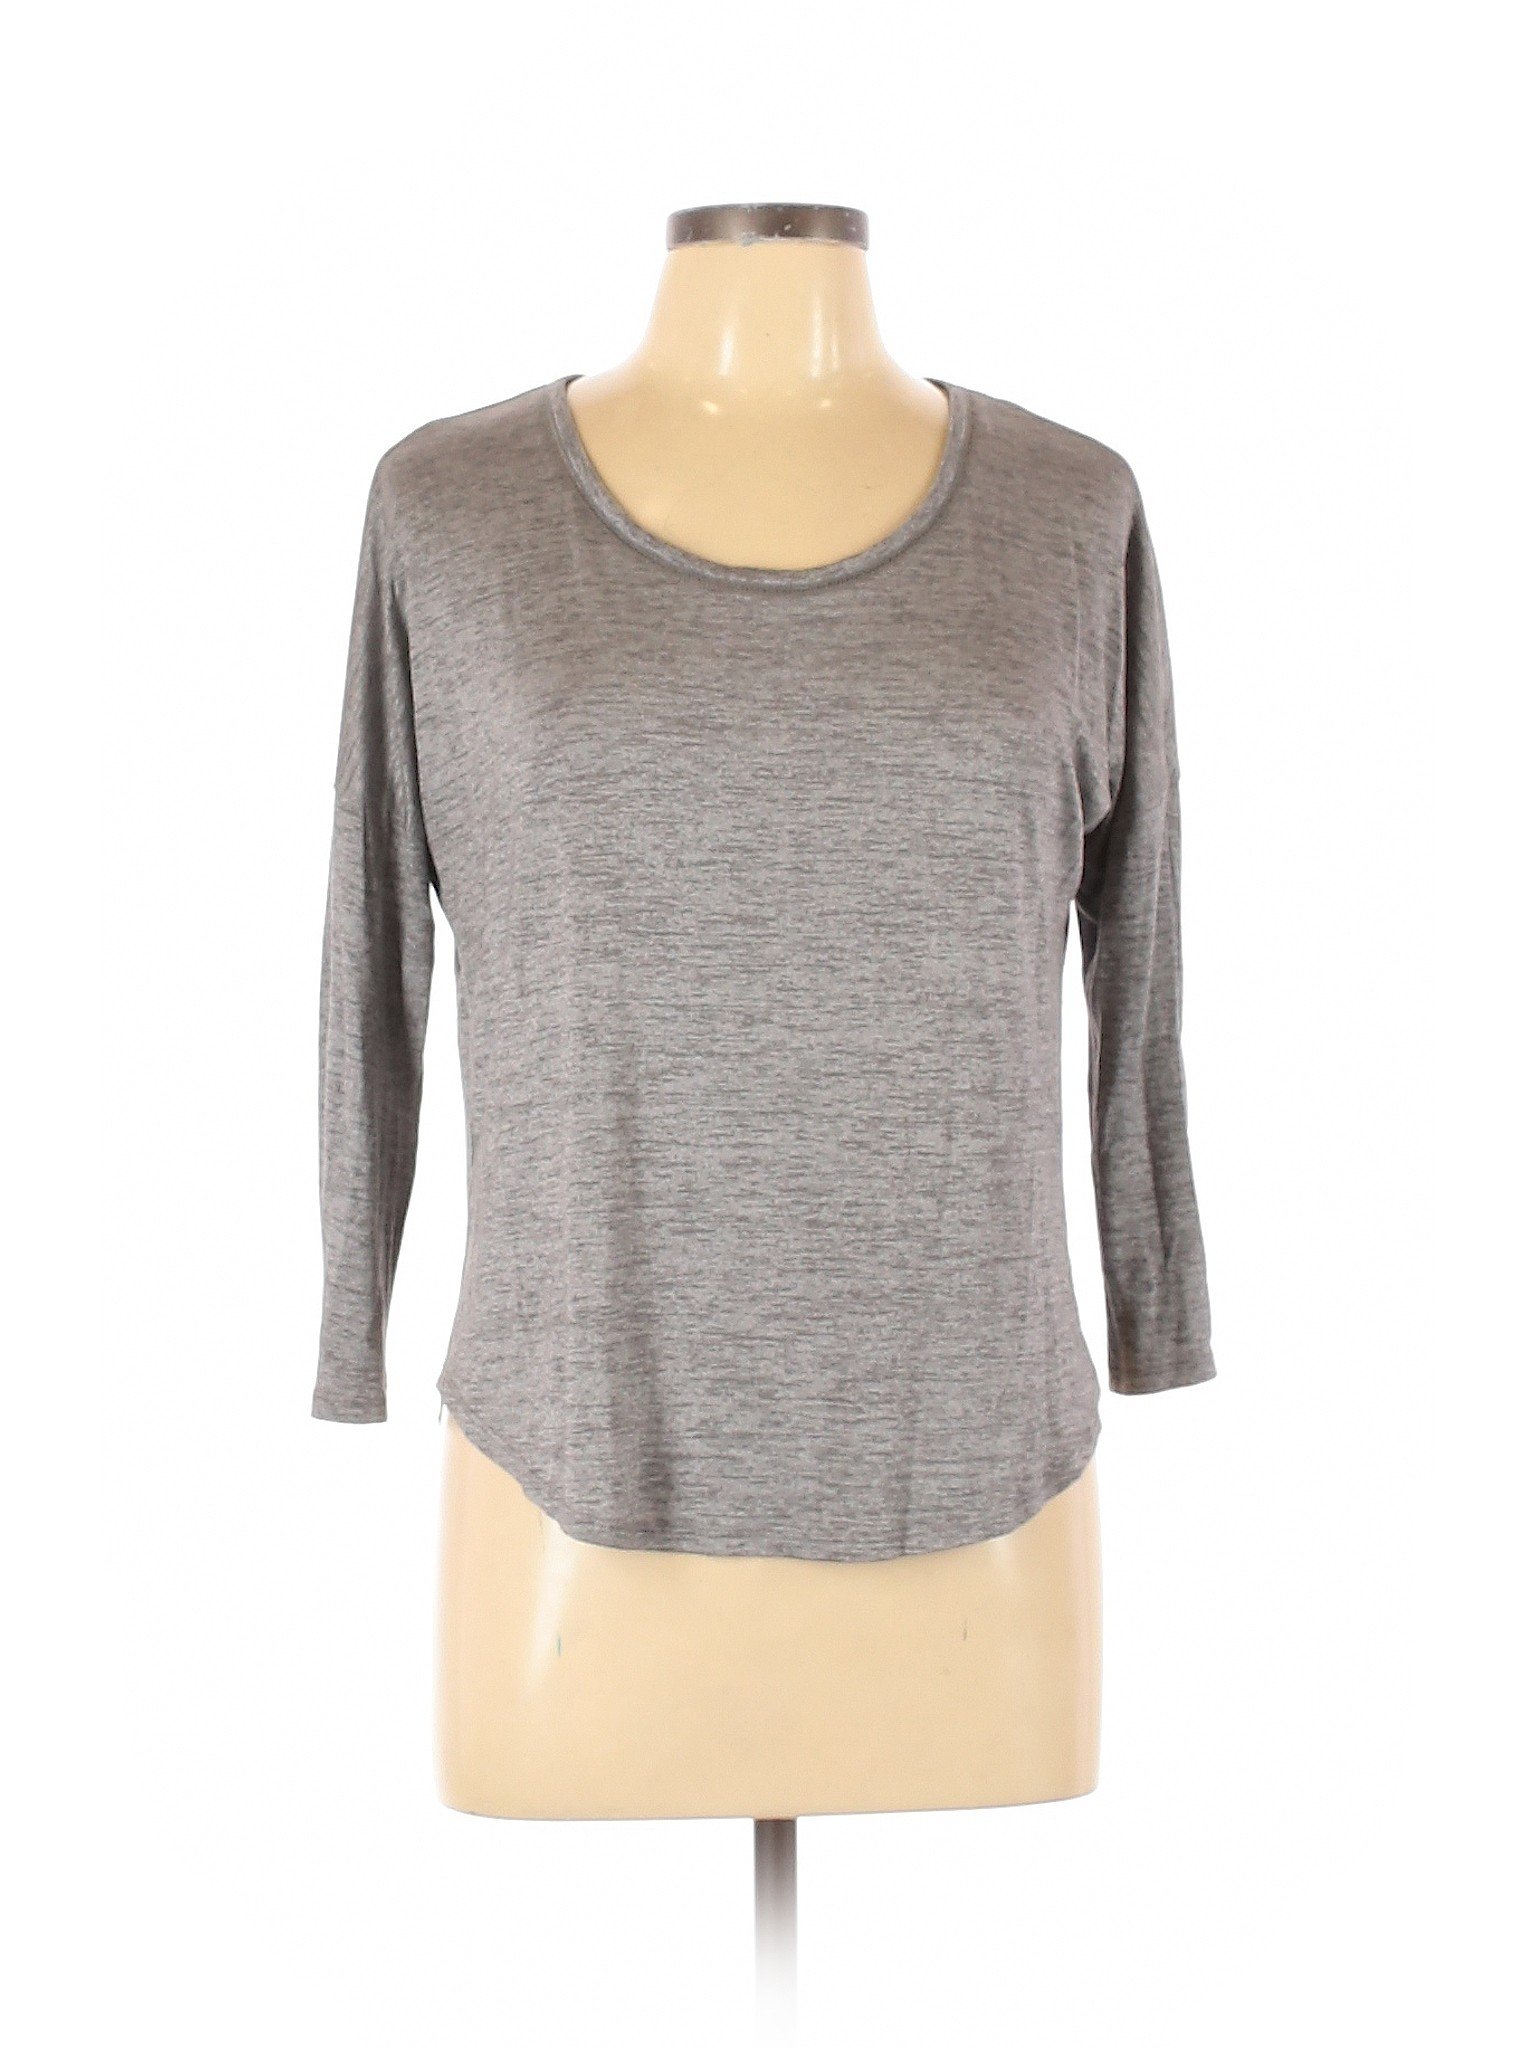 Kenar Women Gray 3/4 Sleeve Top L | eBay